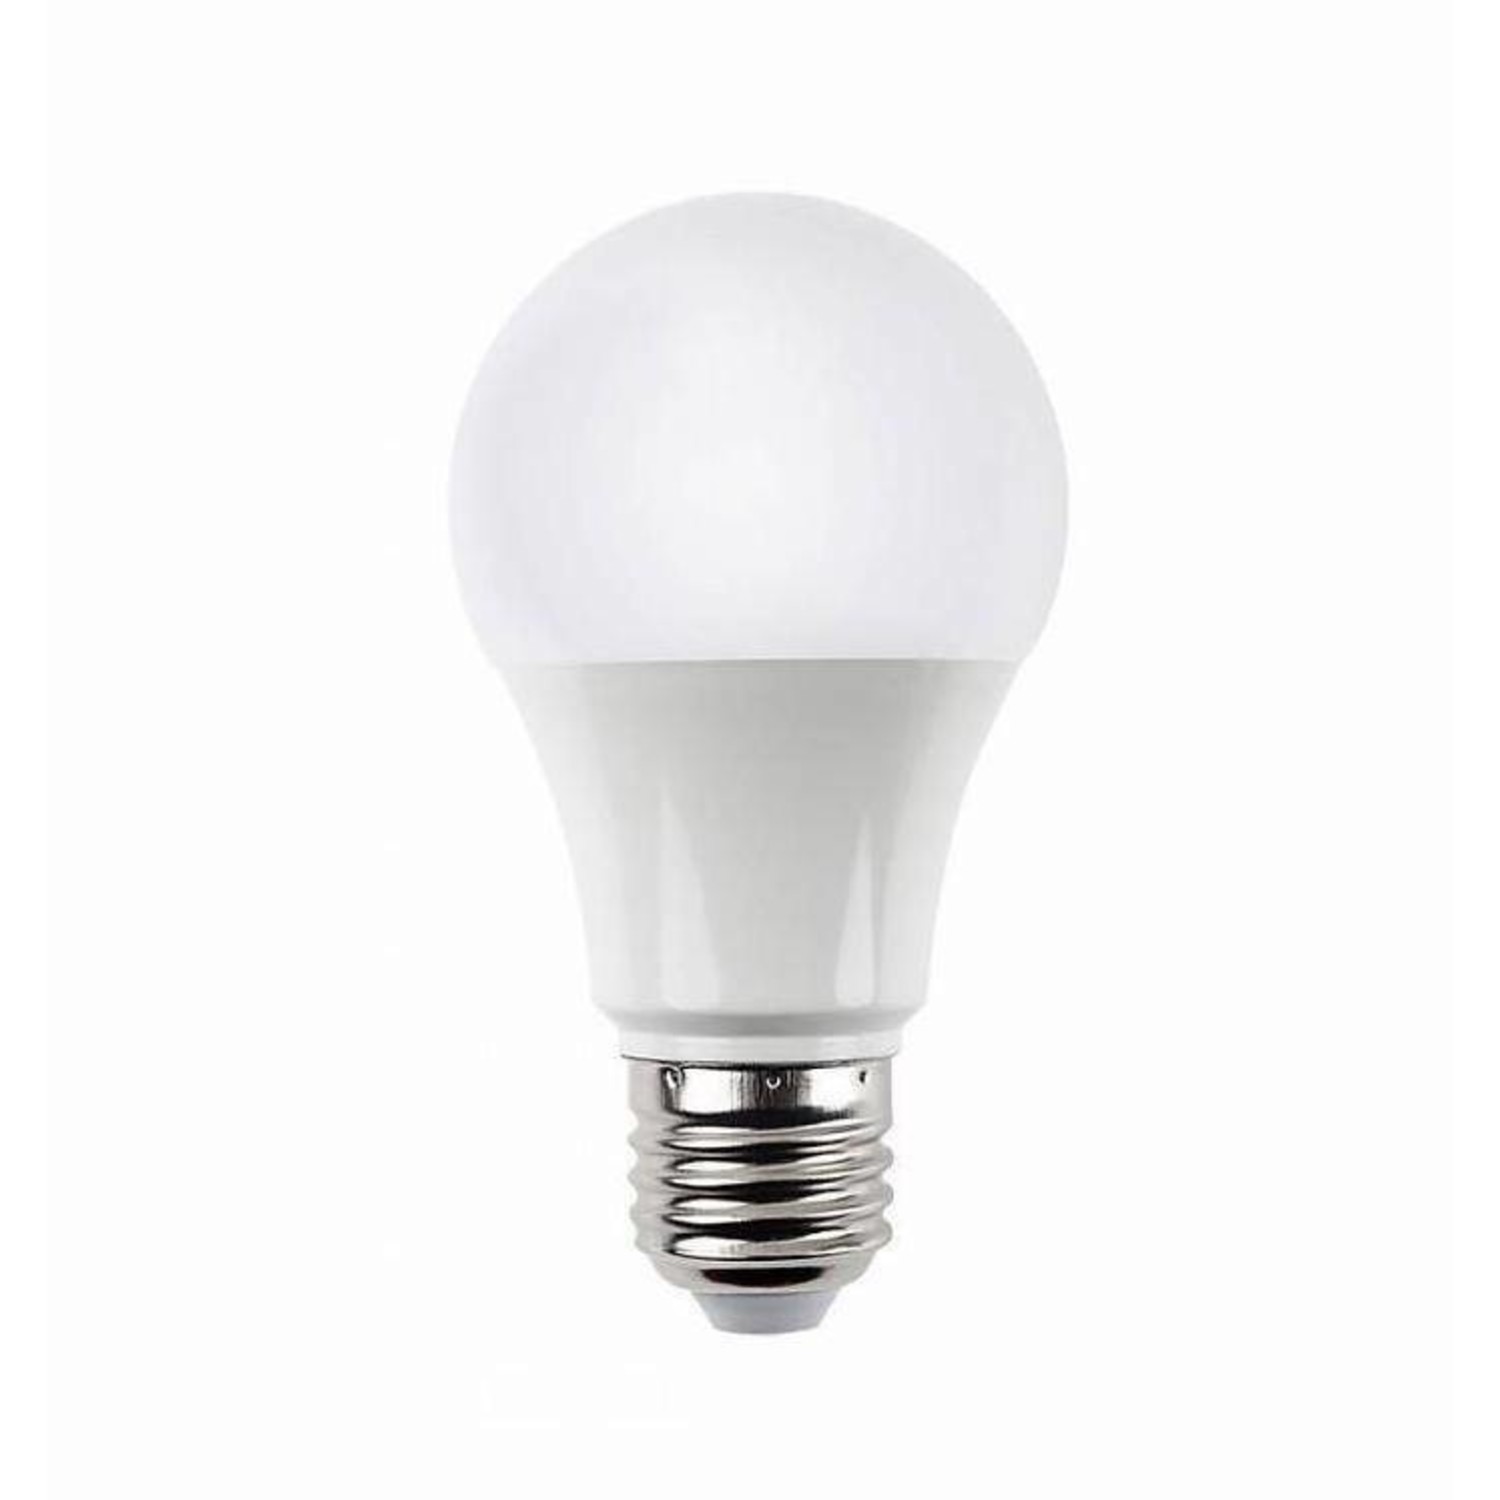 LED lamp met schemer- en bewegingsmelder E27 10W - Lichtkleur optionee